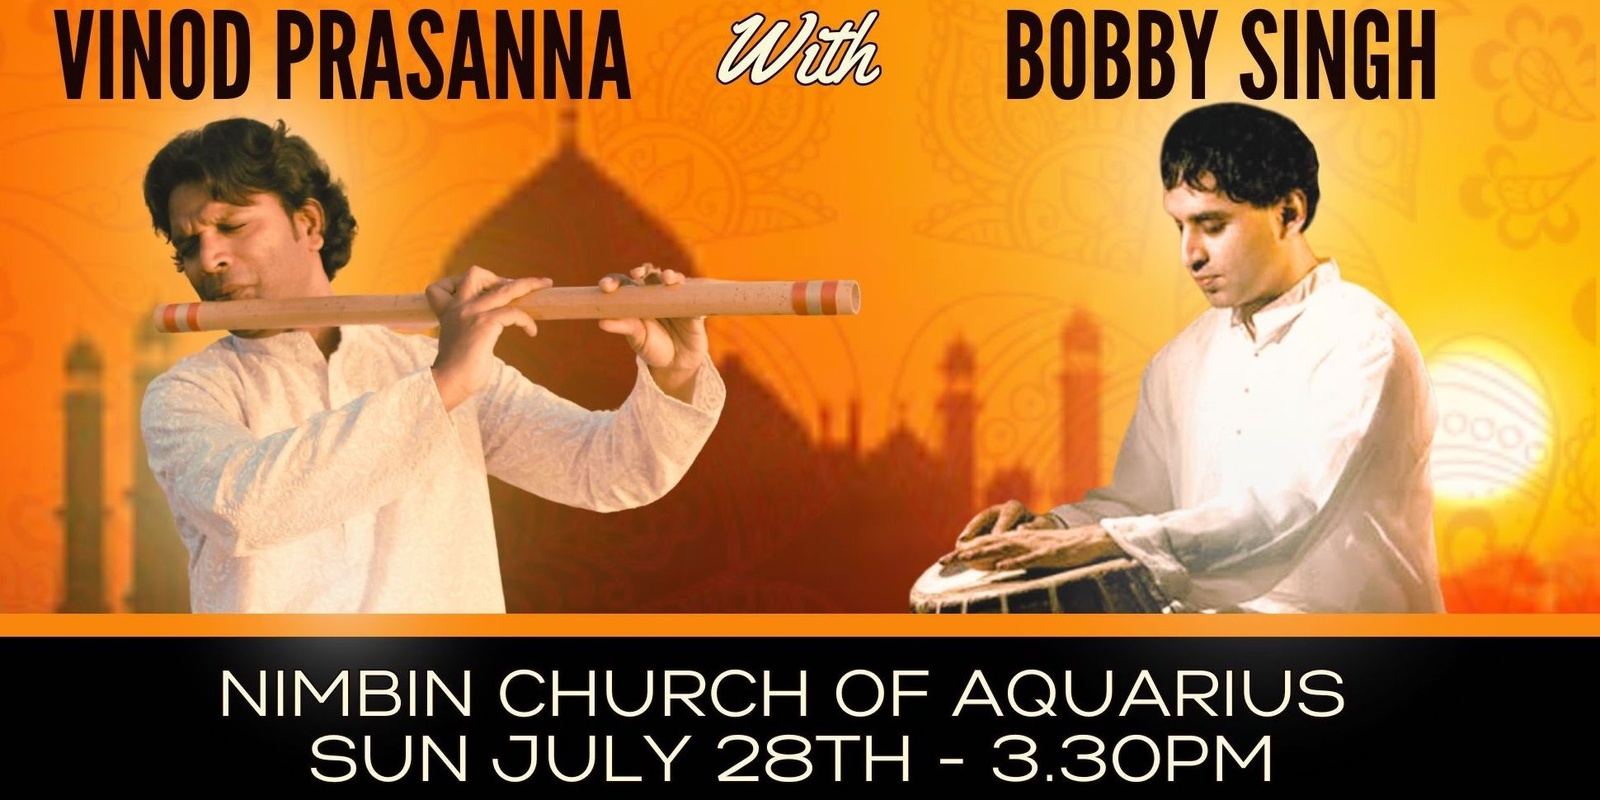 Banner image for Vinod Prasanna With Bobby Singh in Concert